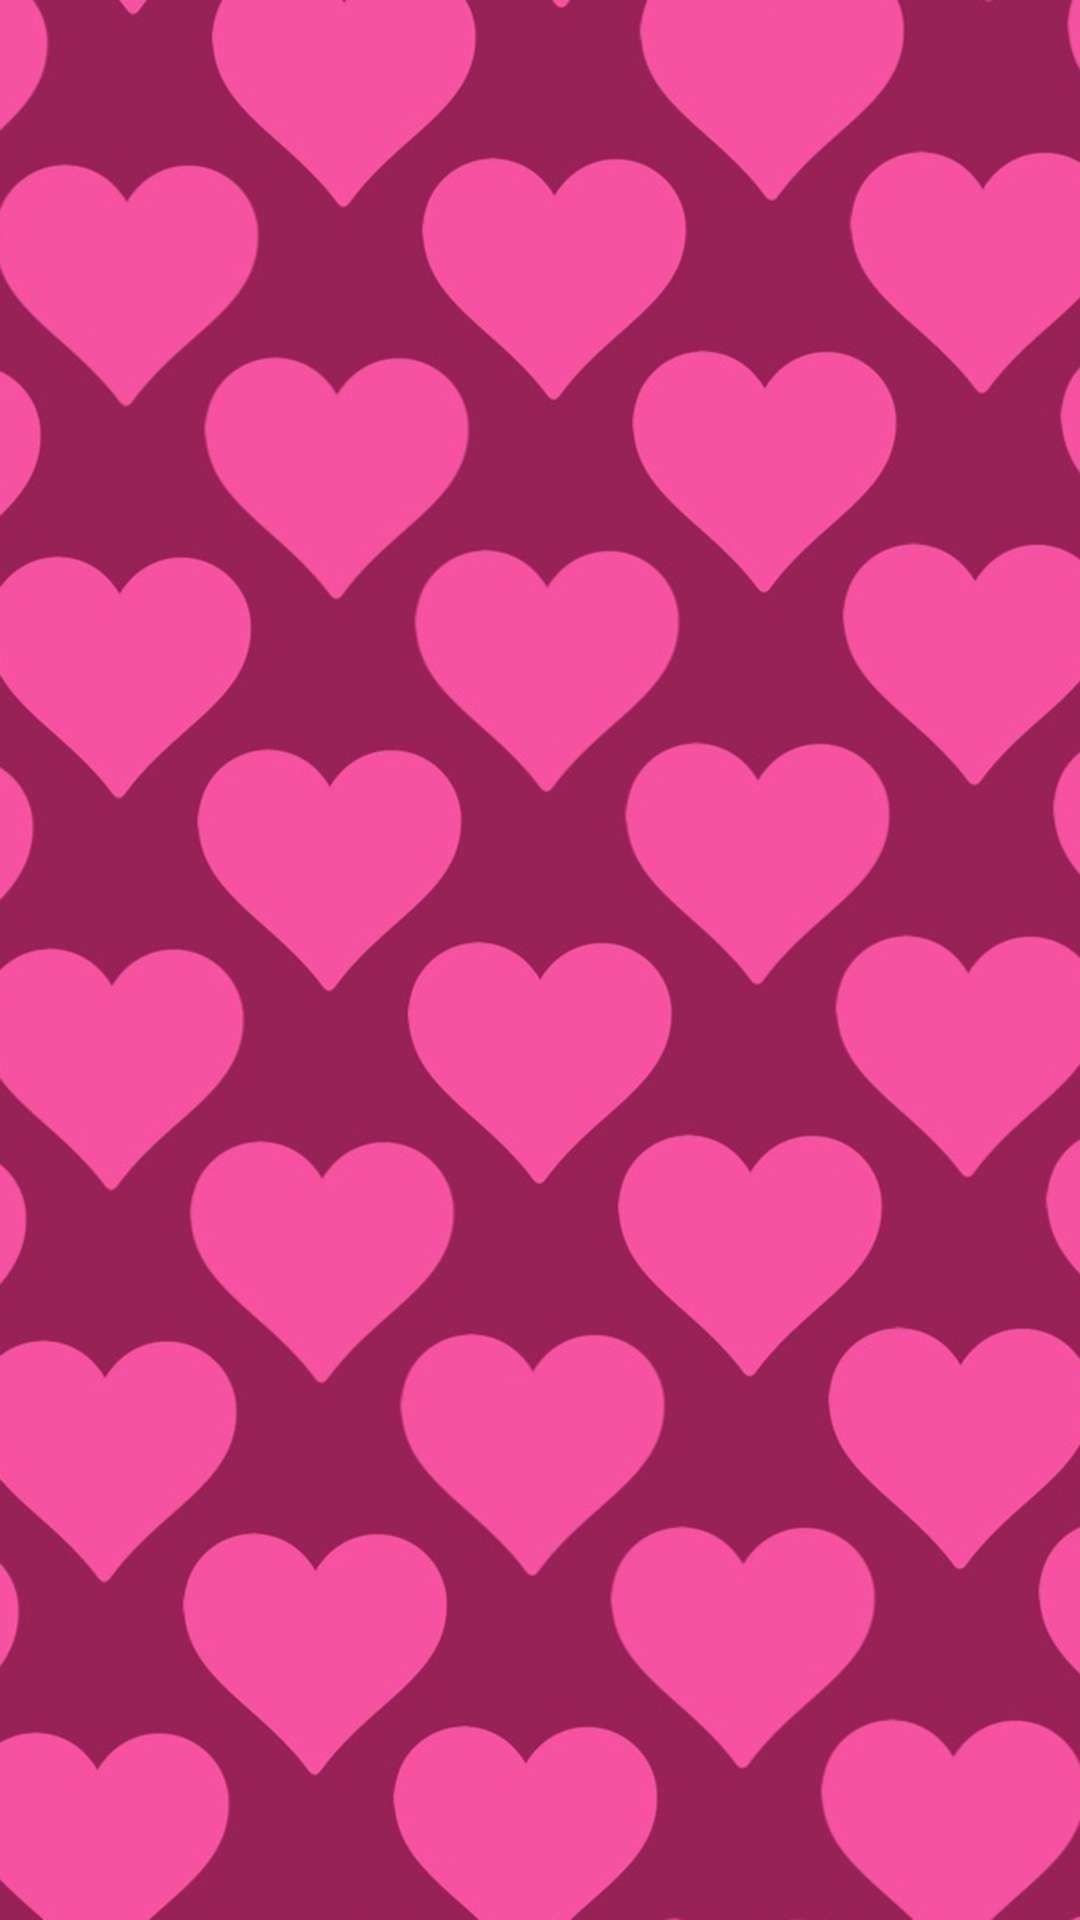 Cute Pink Heart Aesthetic Wallpaperbackground Stock Illustration 1950053734   Shutterstock